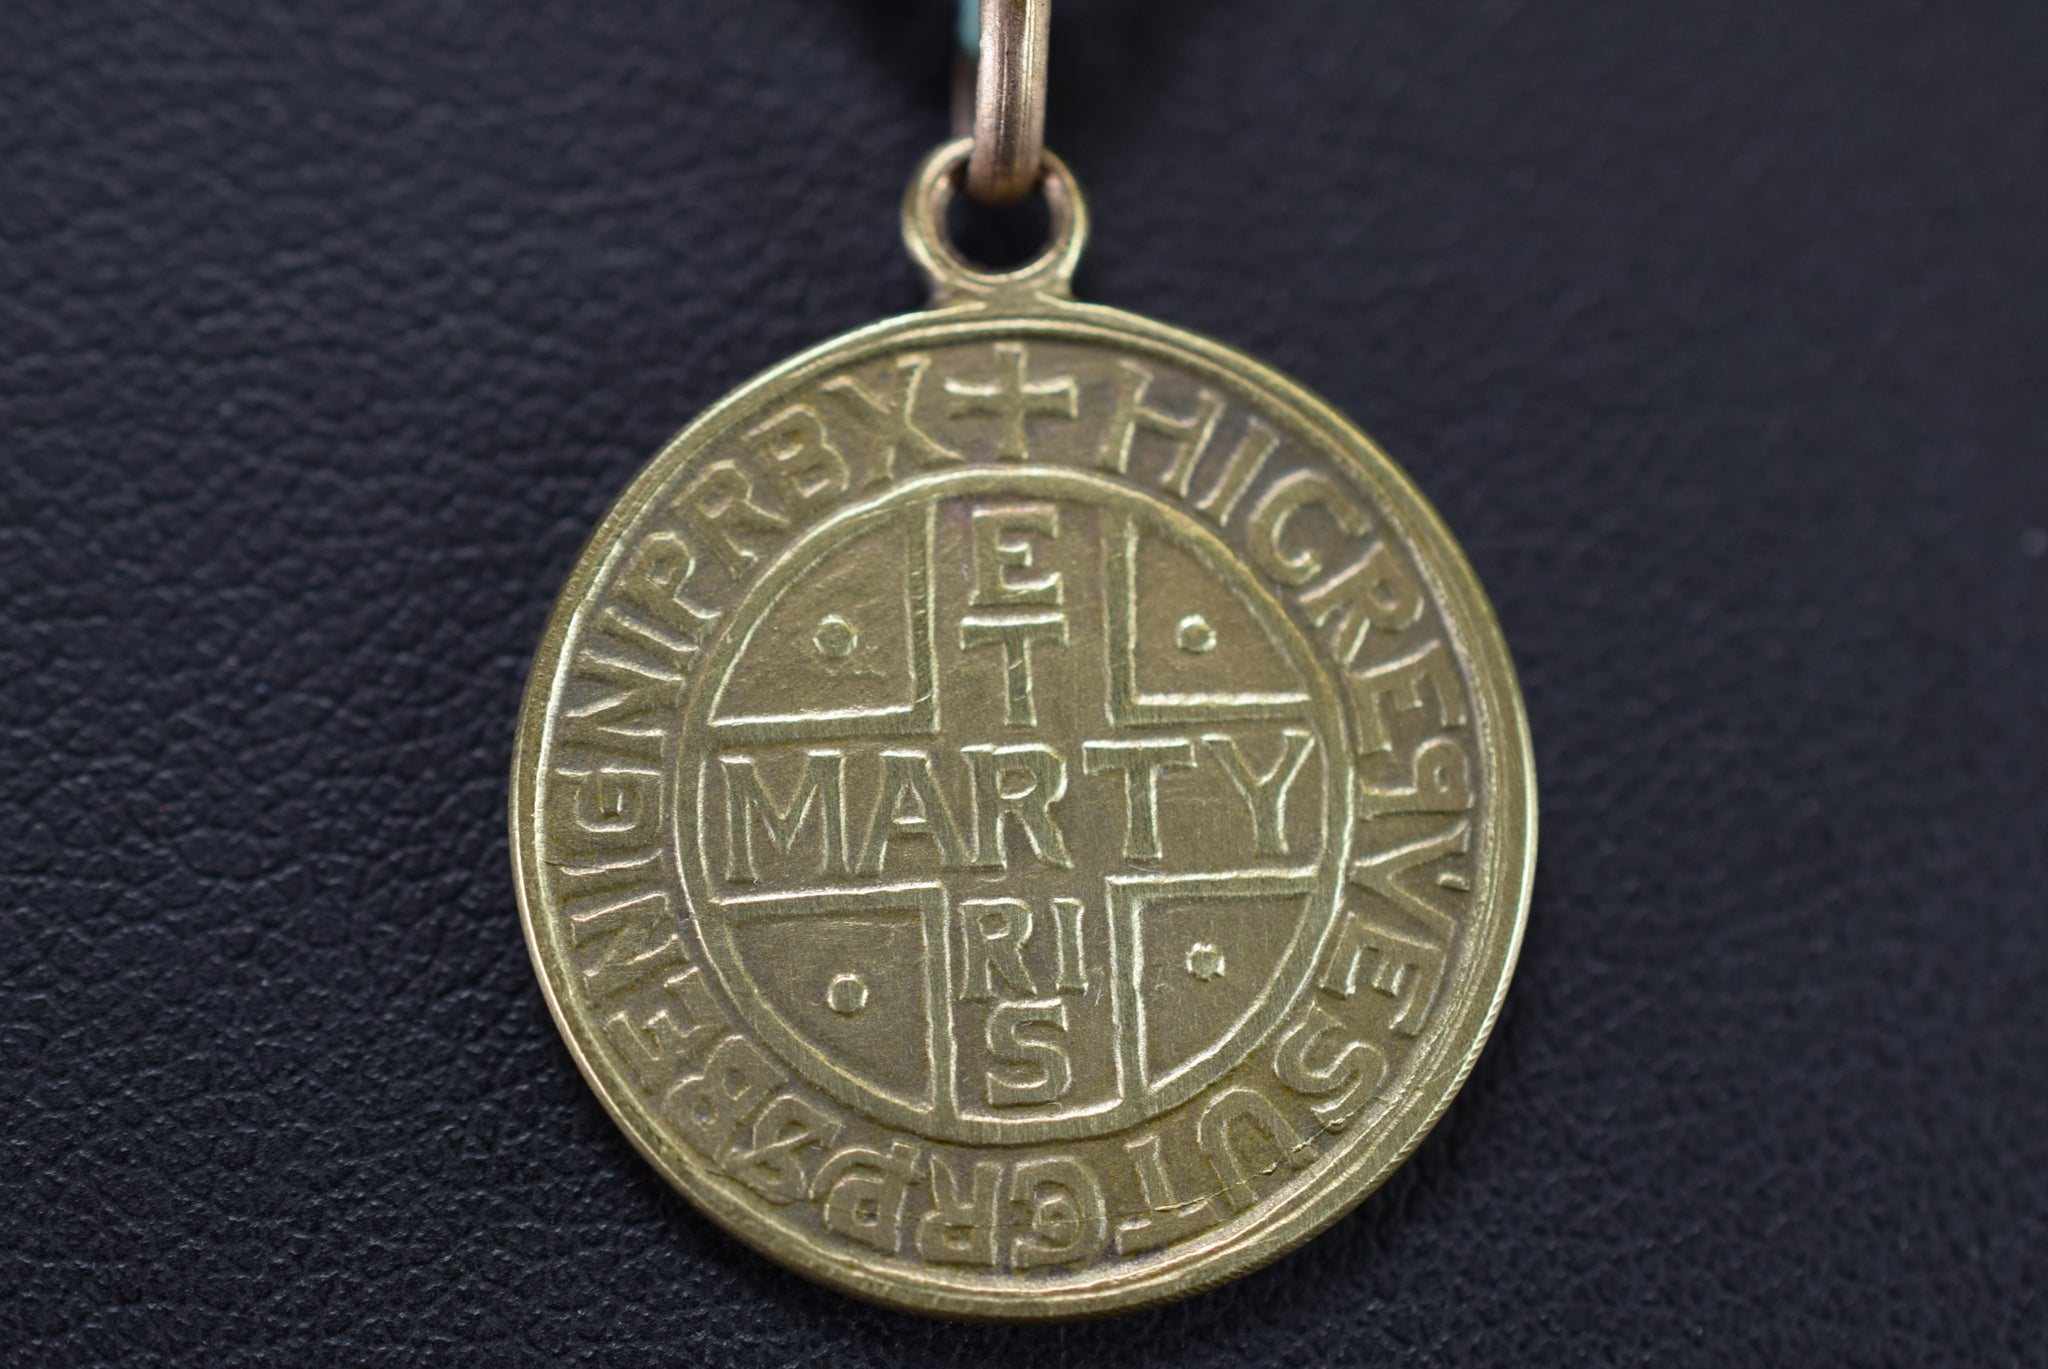 Saint Benigne Martyr Medal